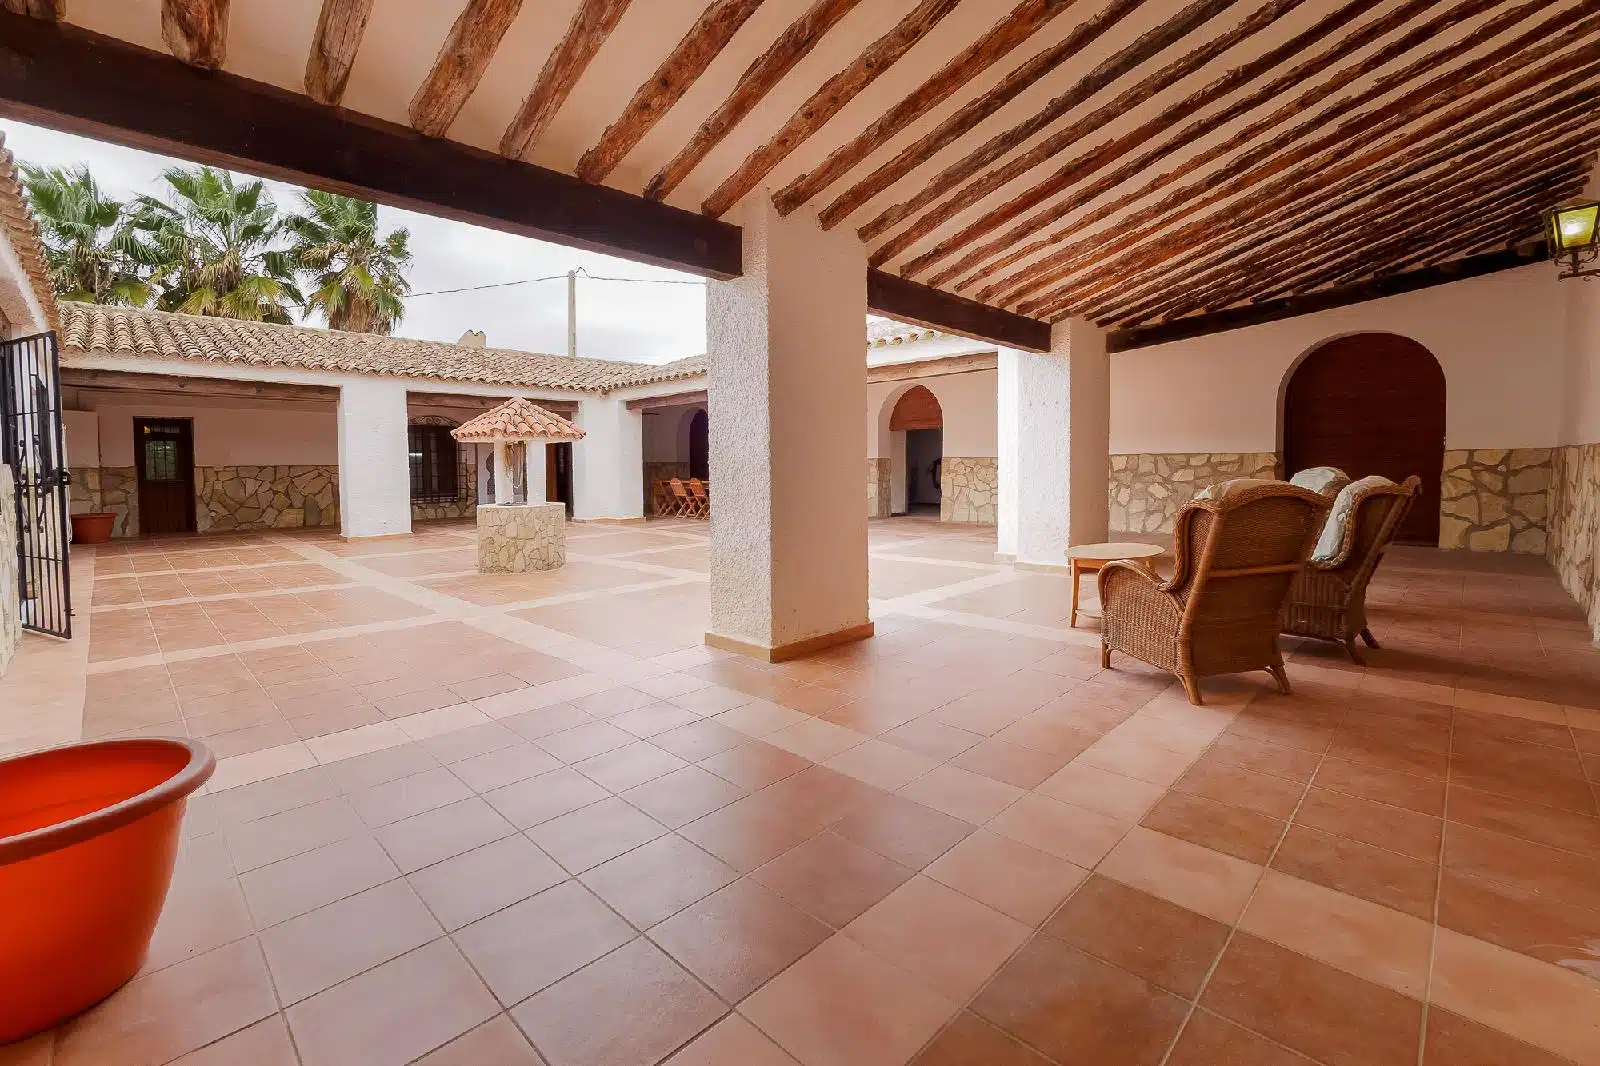 Resale Villa Te koop in Antas in Spanje, gelegen aan de Costa de Almería